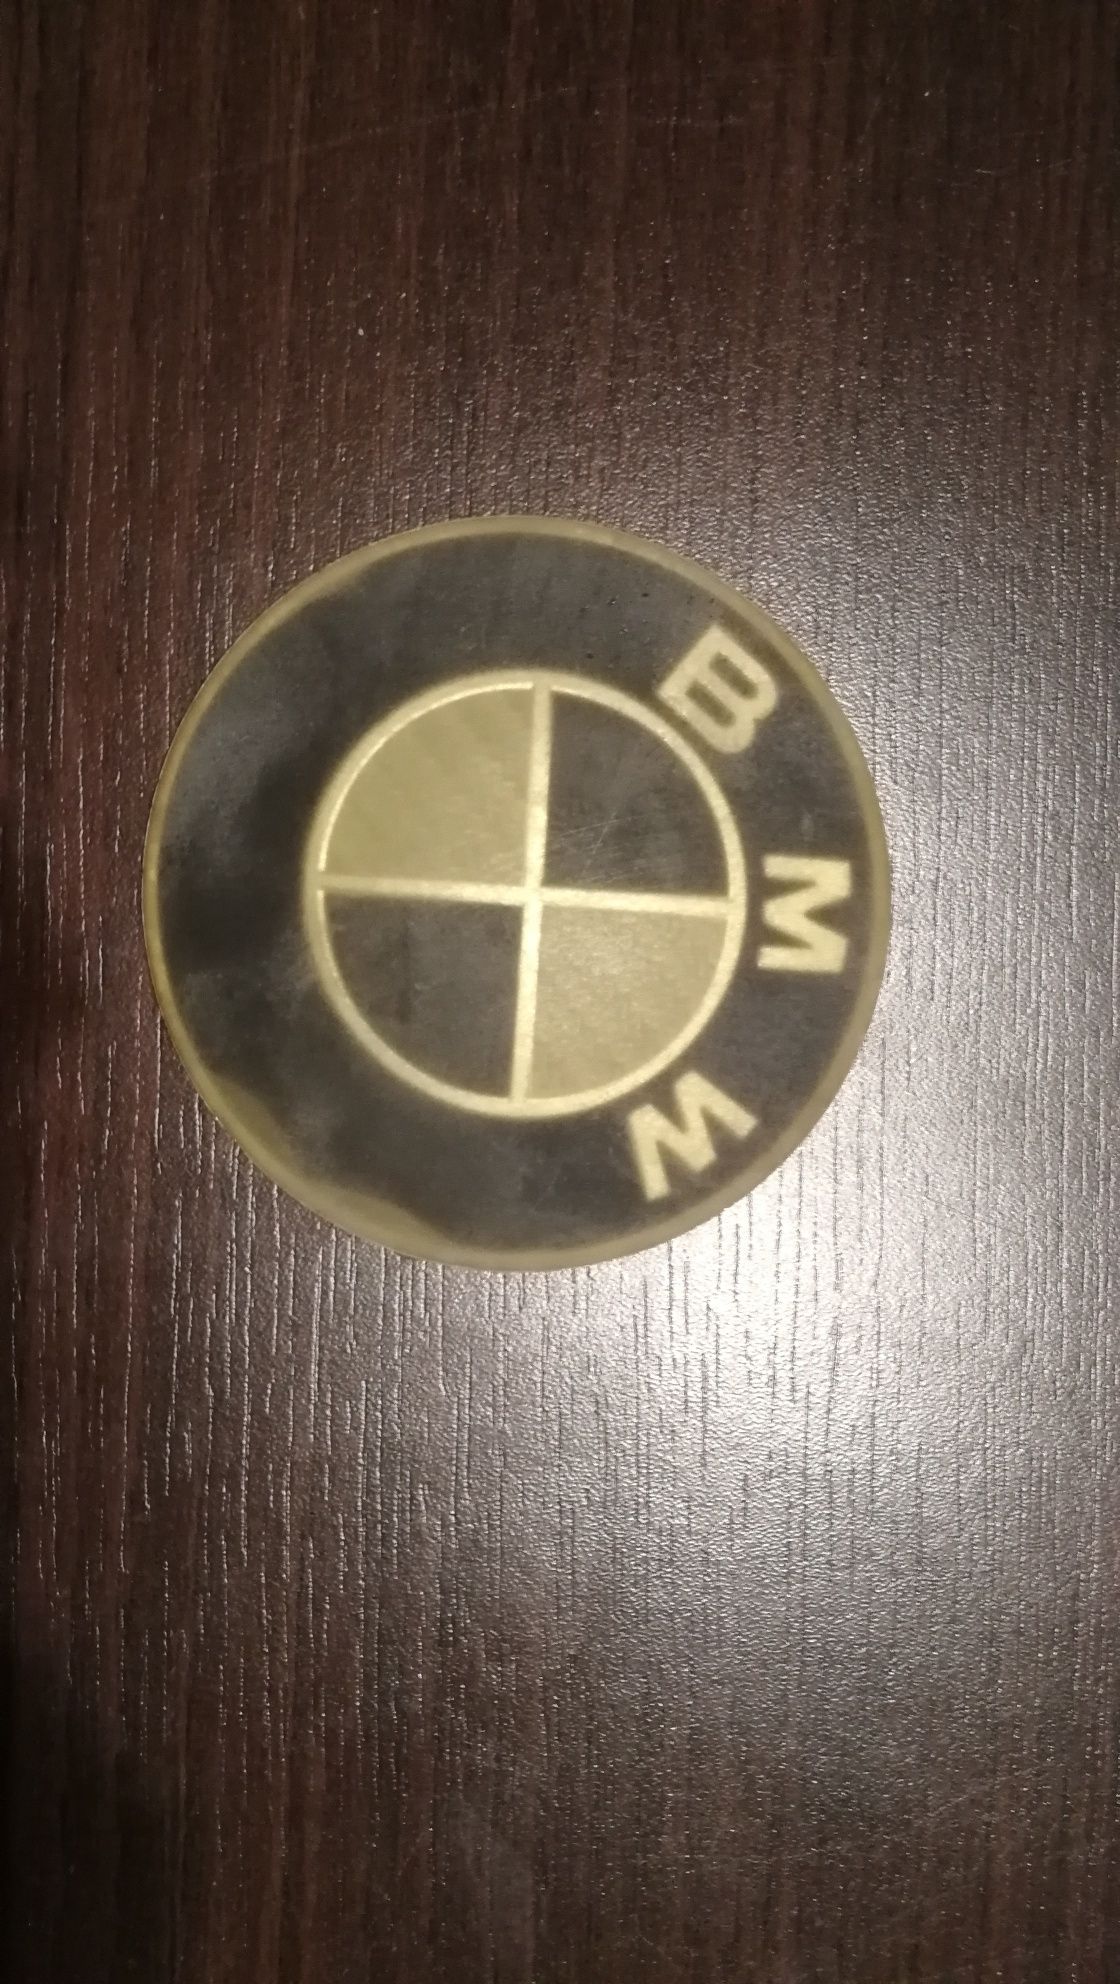 Logo Bmw emblemat bmw